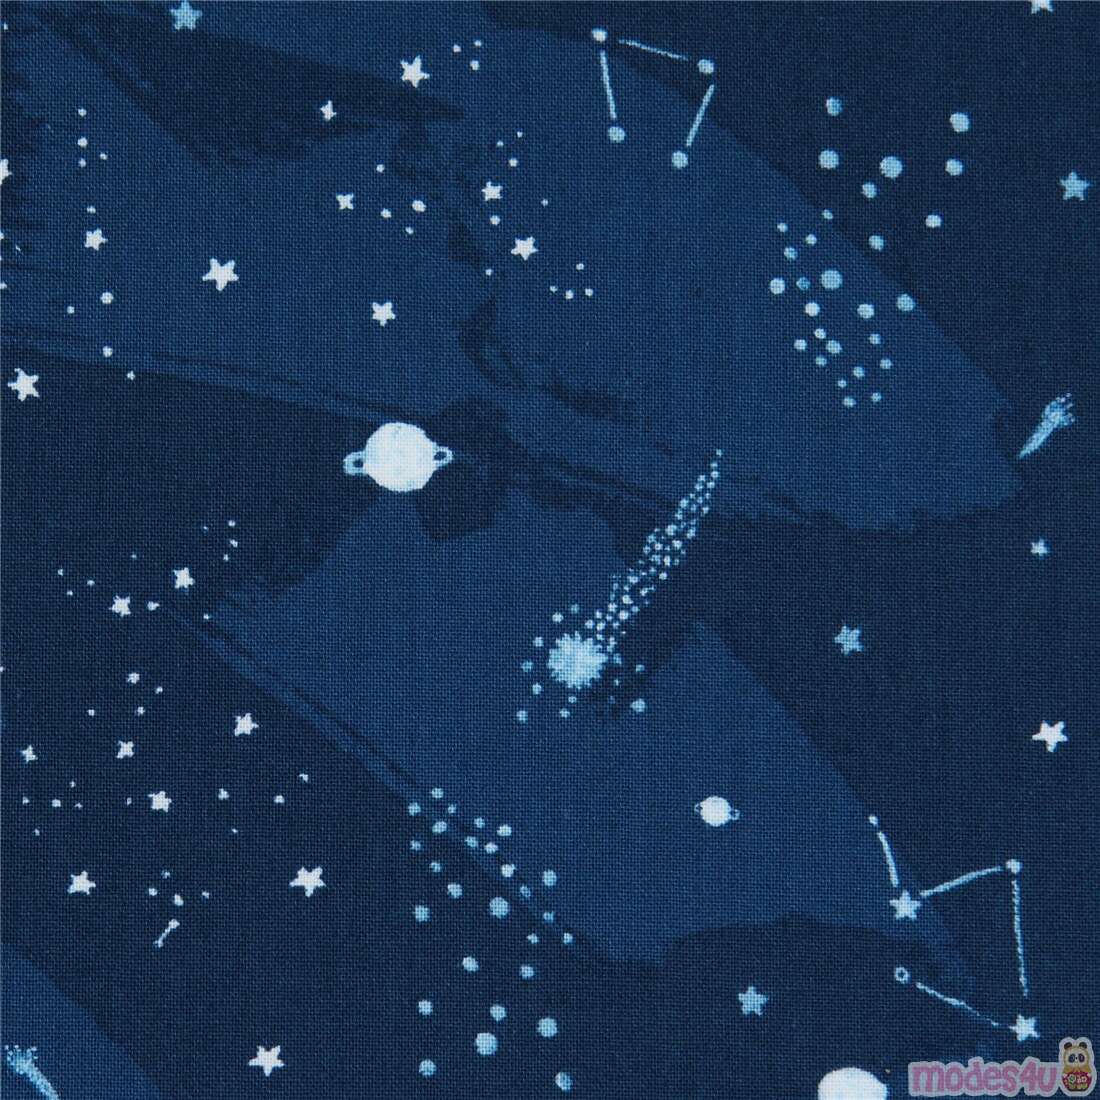 Mermaid with Moons Constellations Fabric by Dear Stella - modeS4u